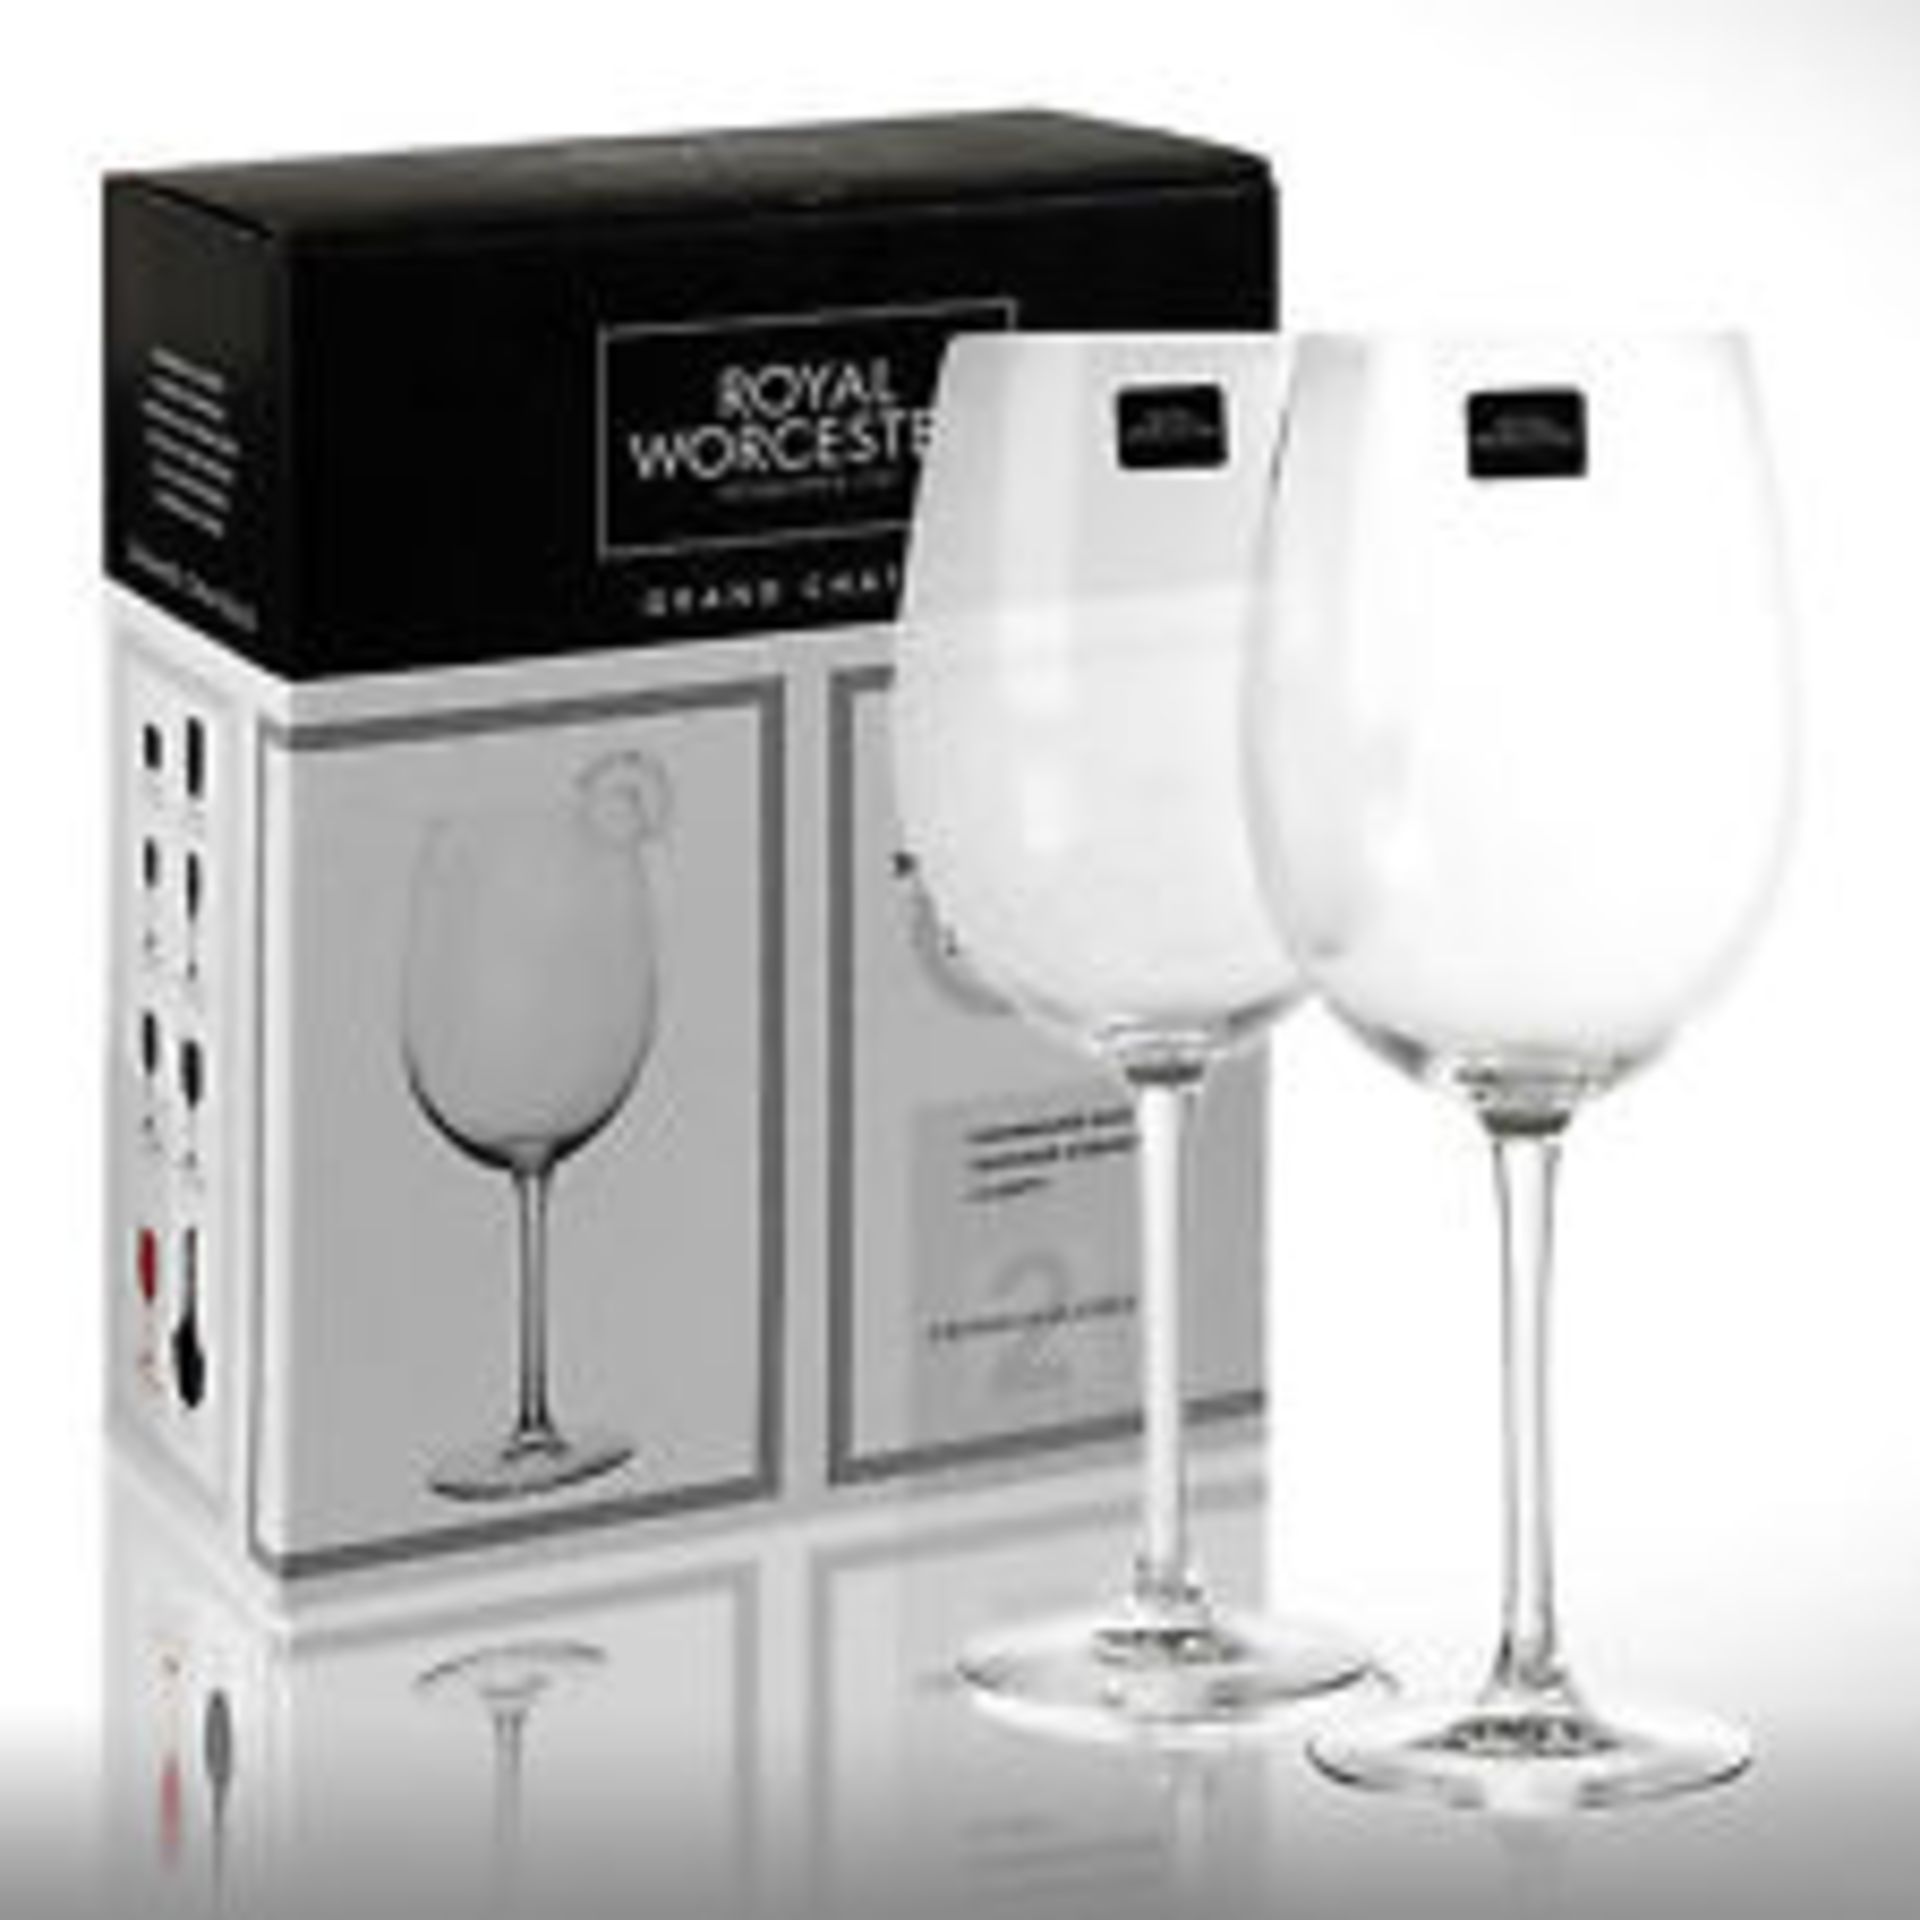 Royal Worcester Boxed Set Of Bordeaux Glasses, 2 per box